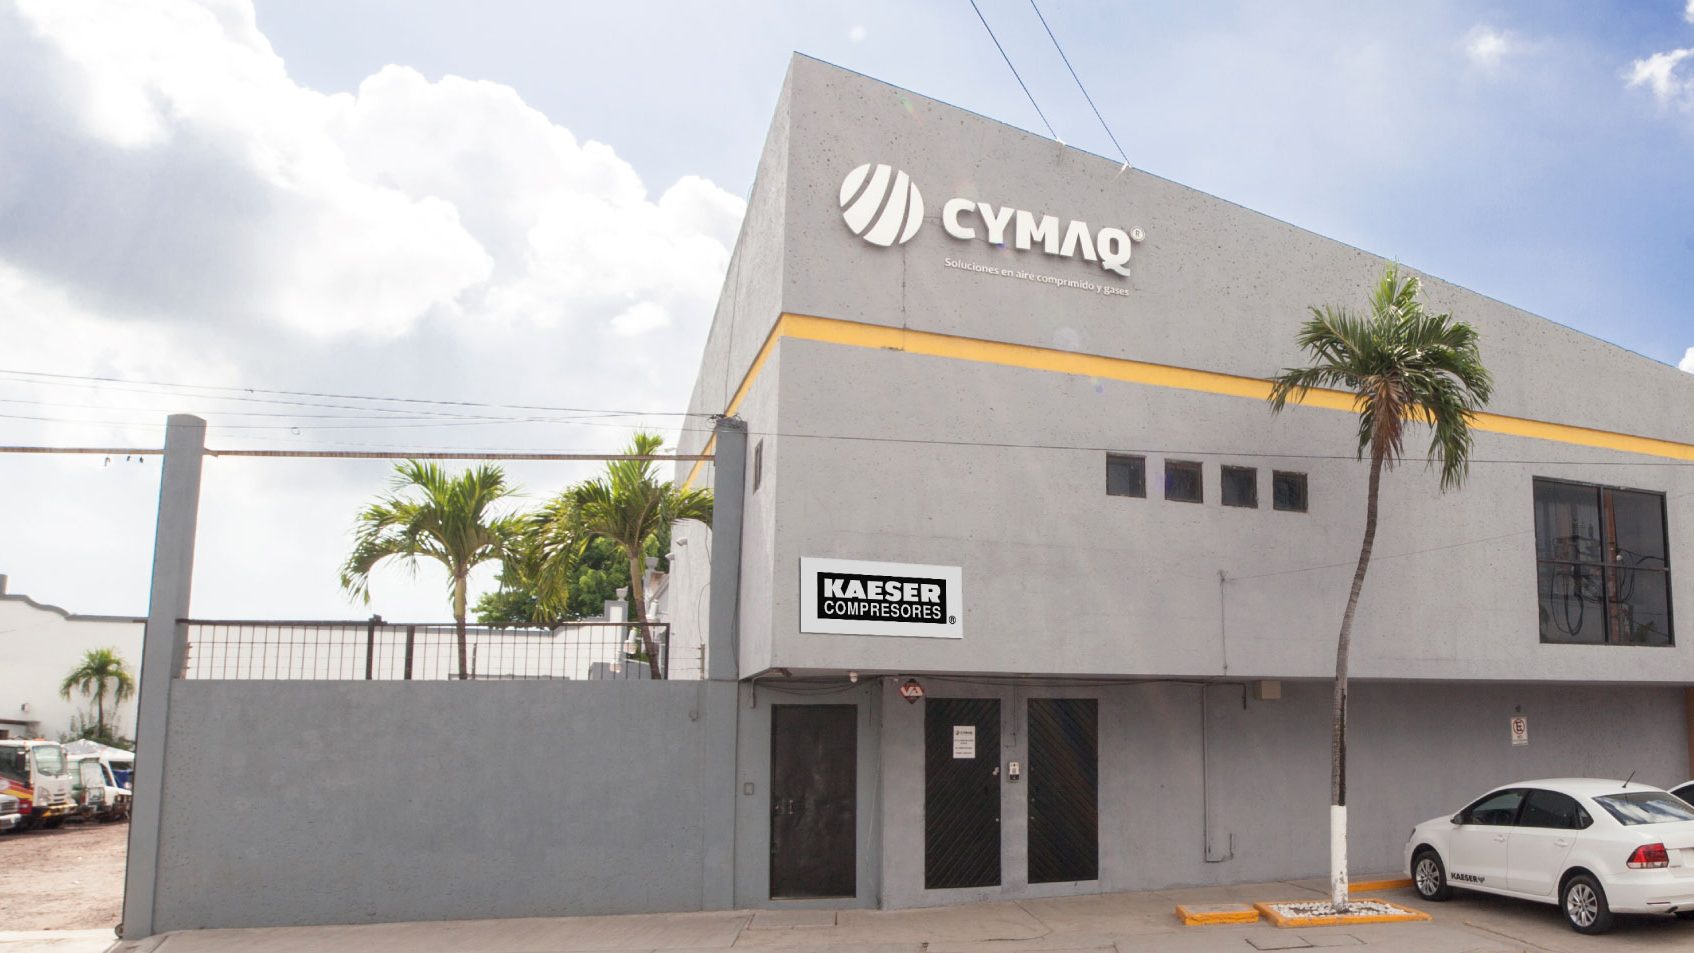 Sucursal CYMAQ en Tampico, Tamaulipas